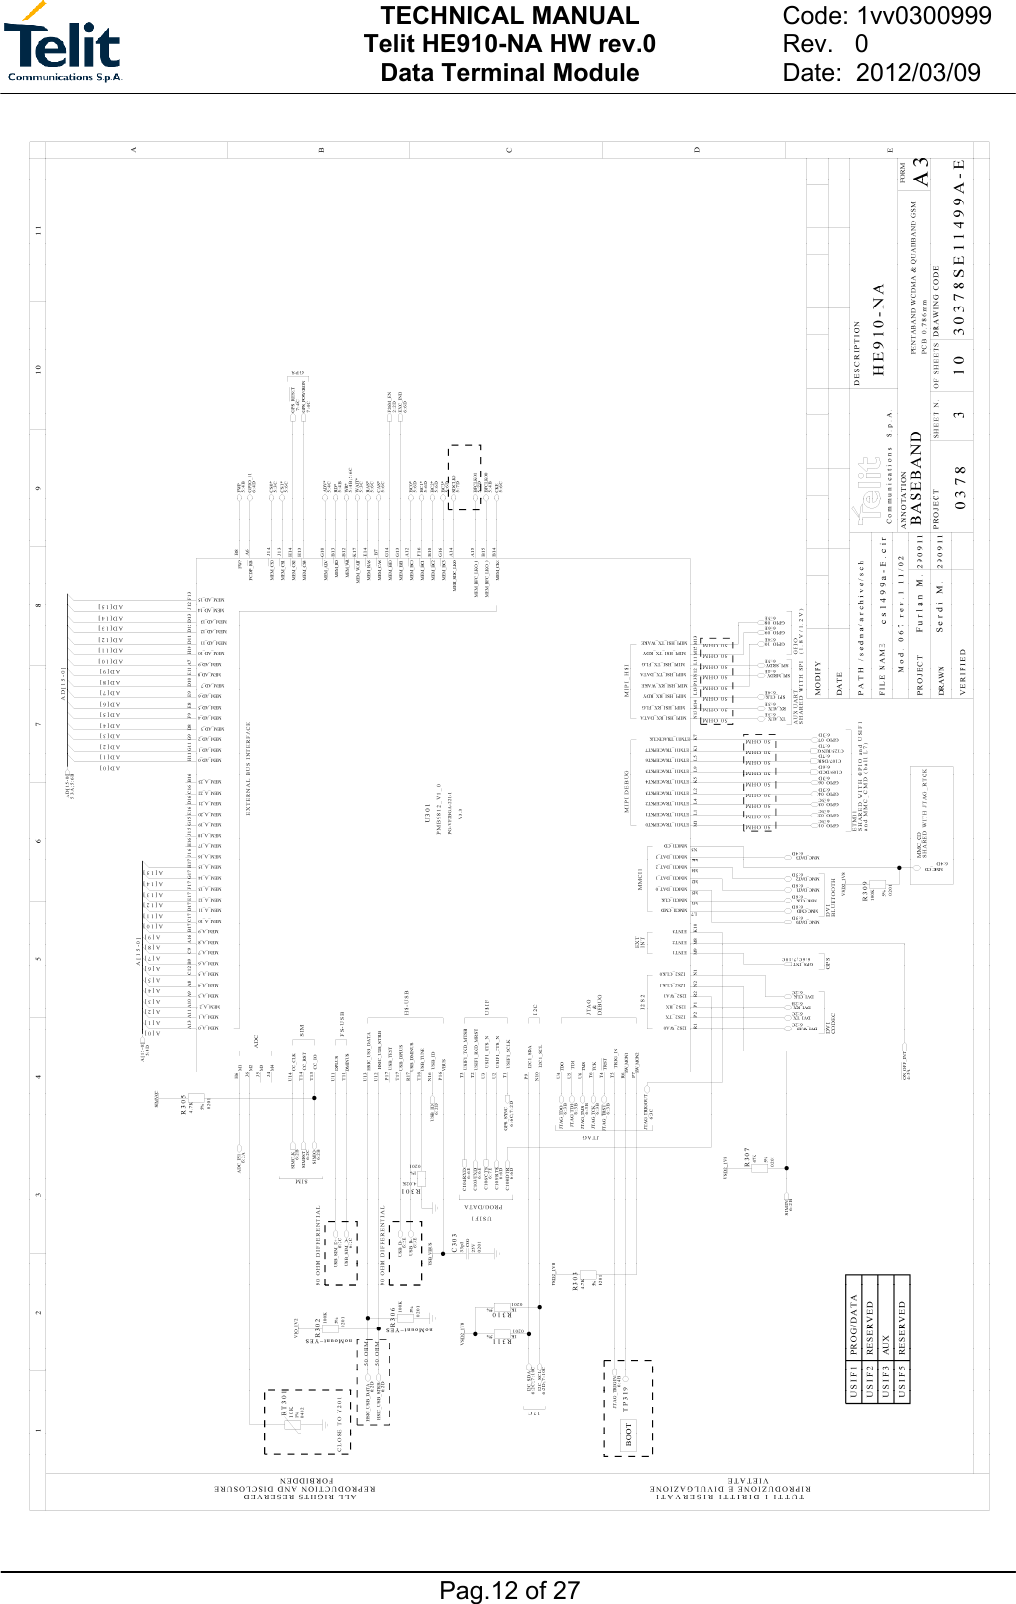 TECHNICAL MANUAL Telit HE910-NA HW rev.0 Data Terminal Module   Pag.12 of 27 Code: 1vv0300999    Rev.   0  Date:  2012/03/09  